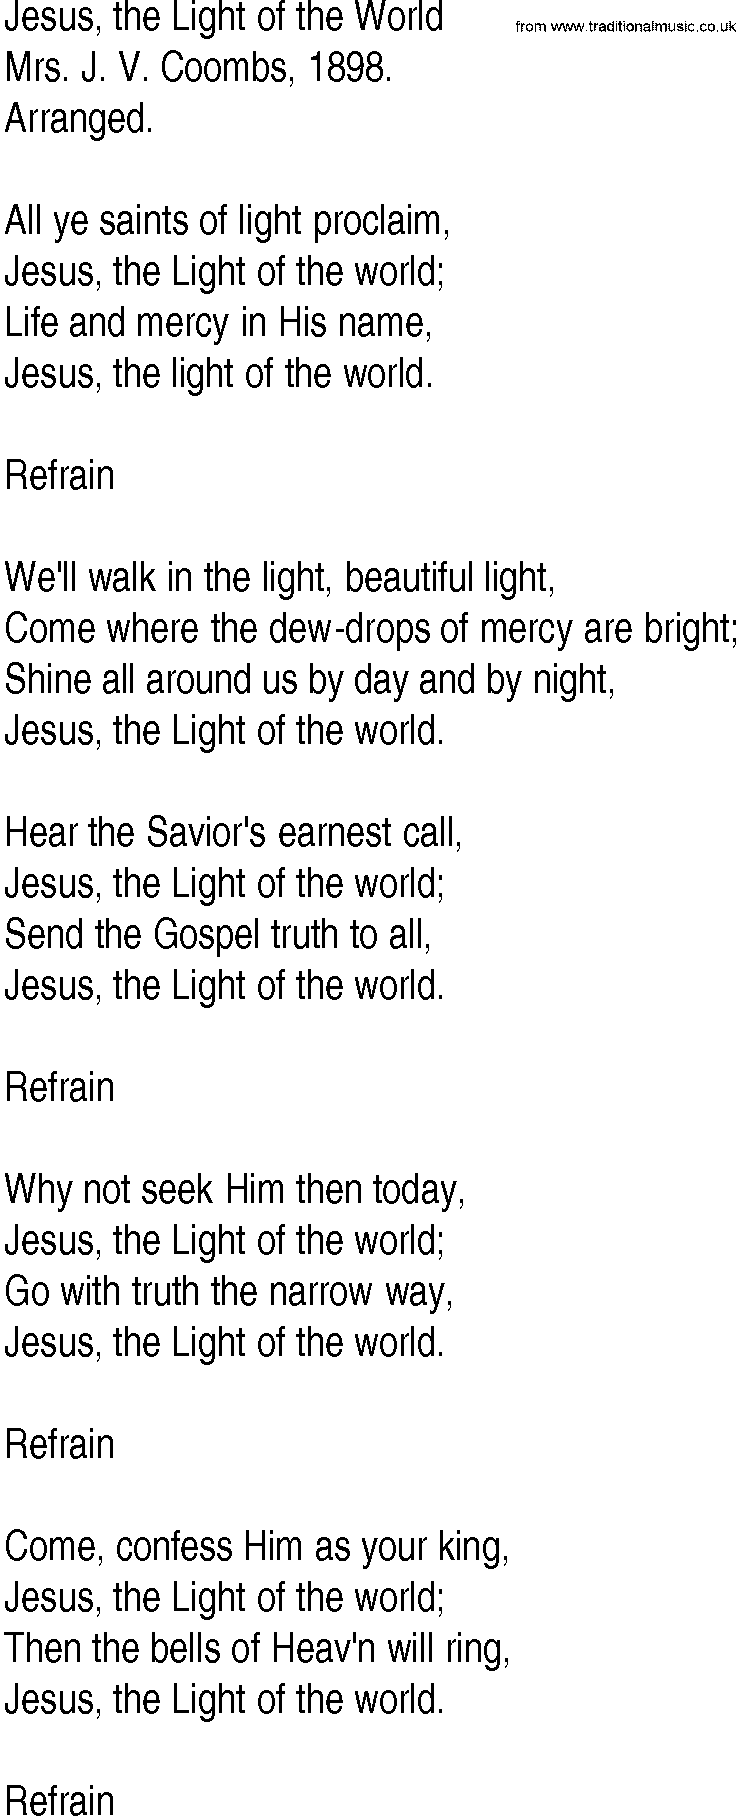 Hymn and Gospel Song: Jesus, the Light of the World by Mrs J V Coombs lyrics